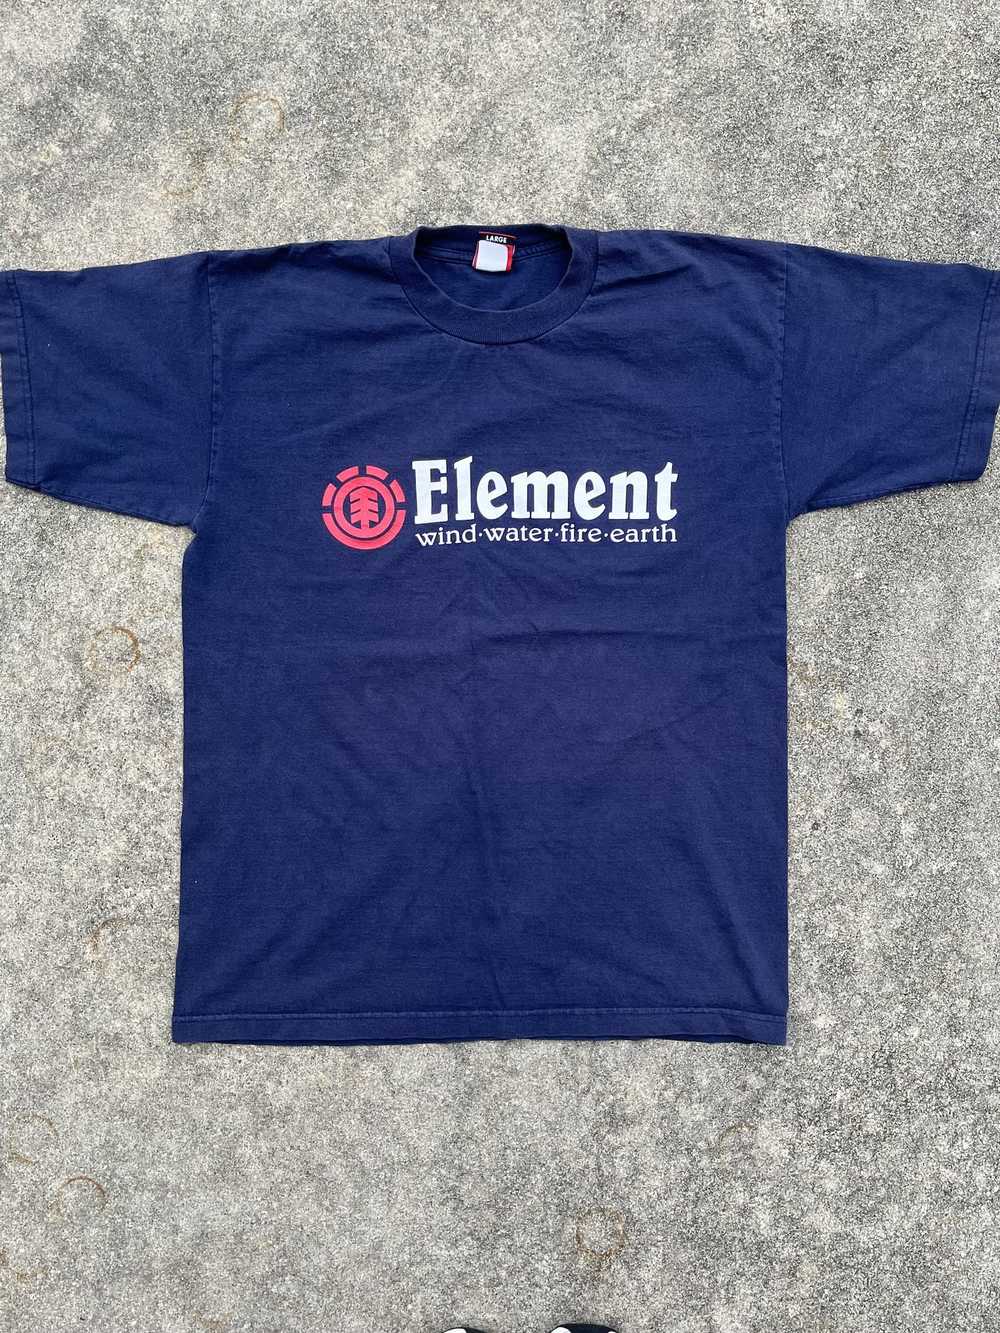 Element Vintage element skate tee - image 1